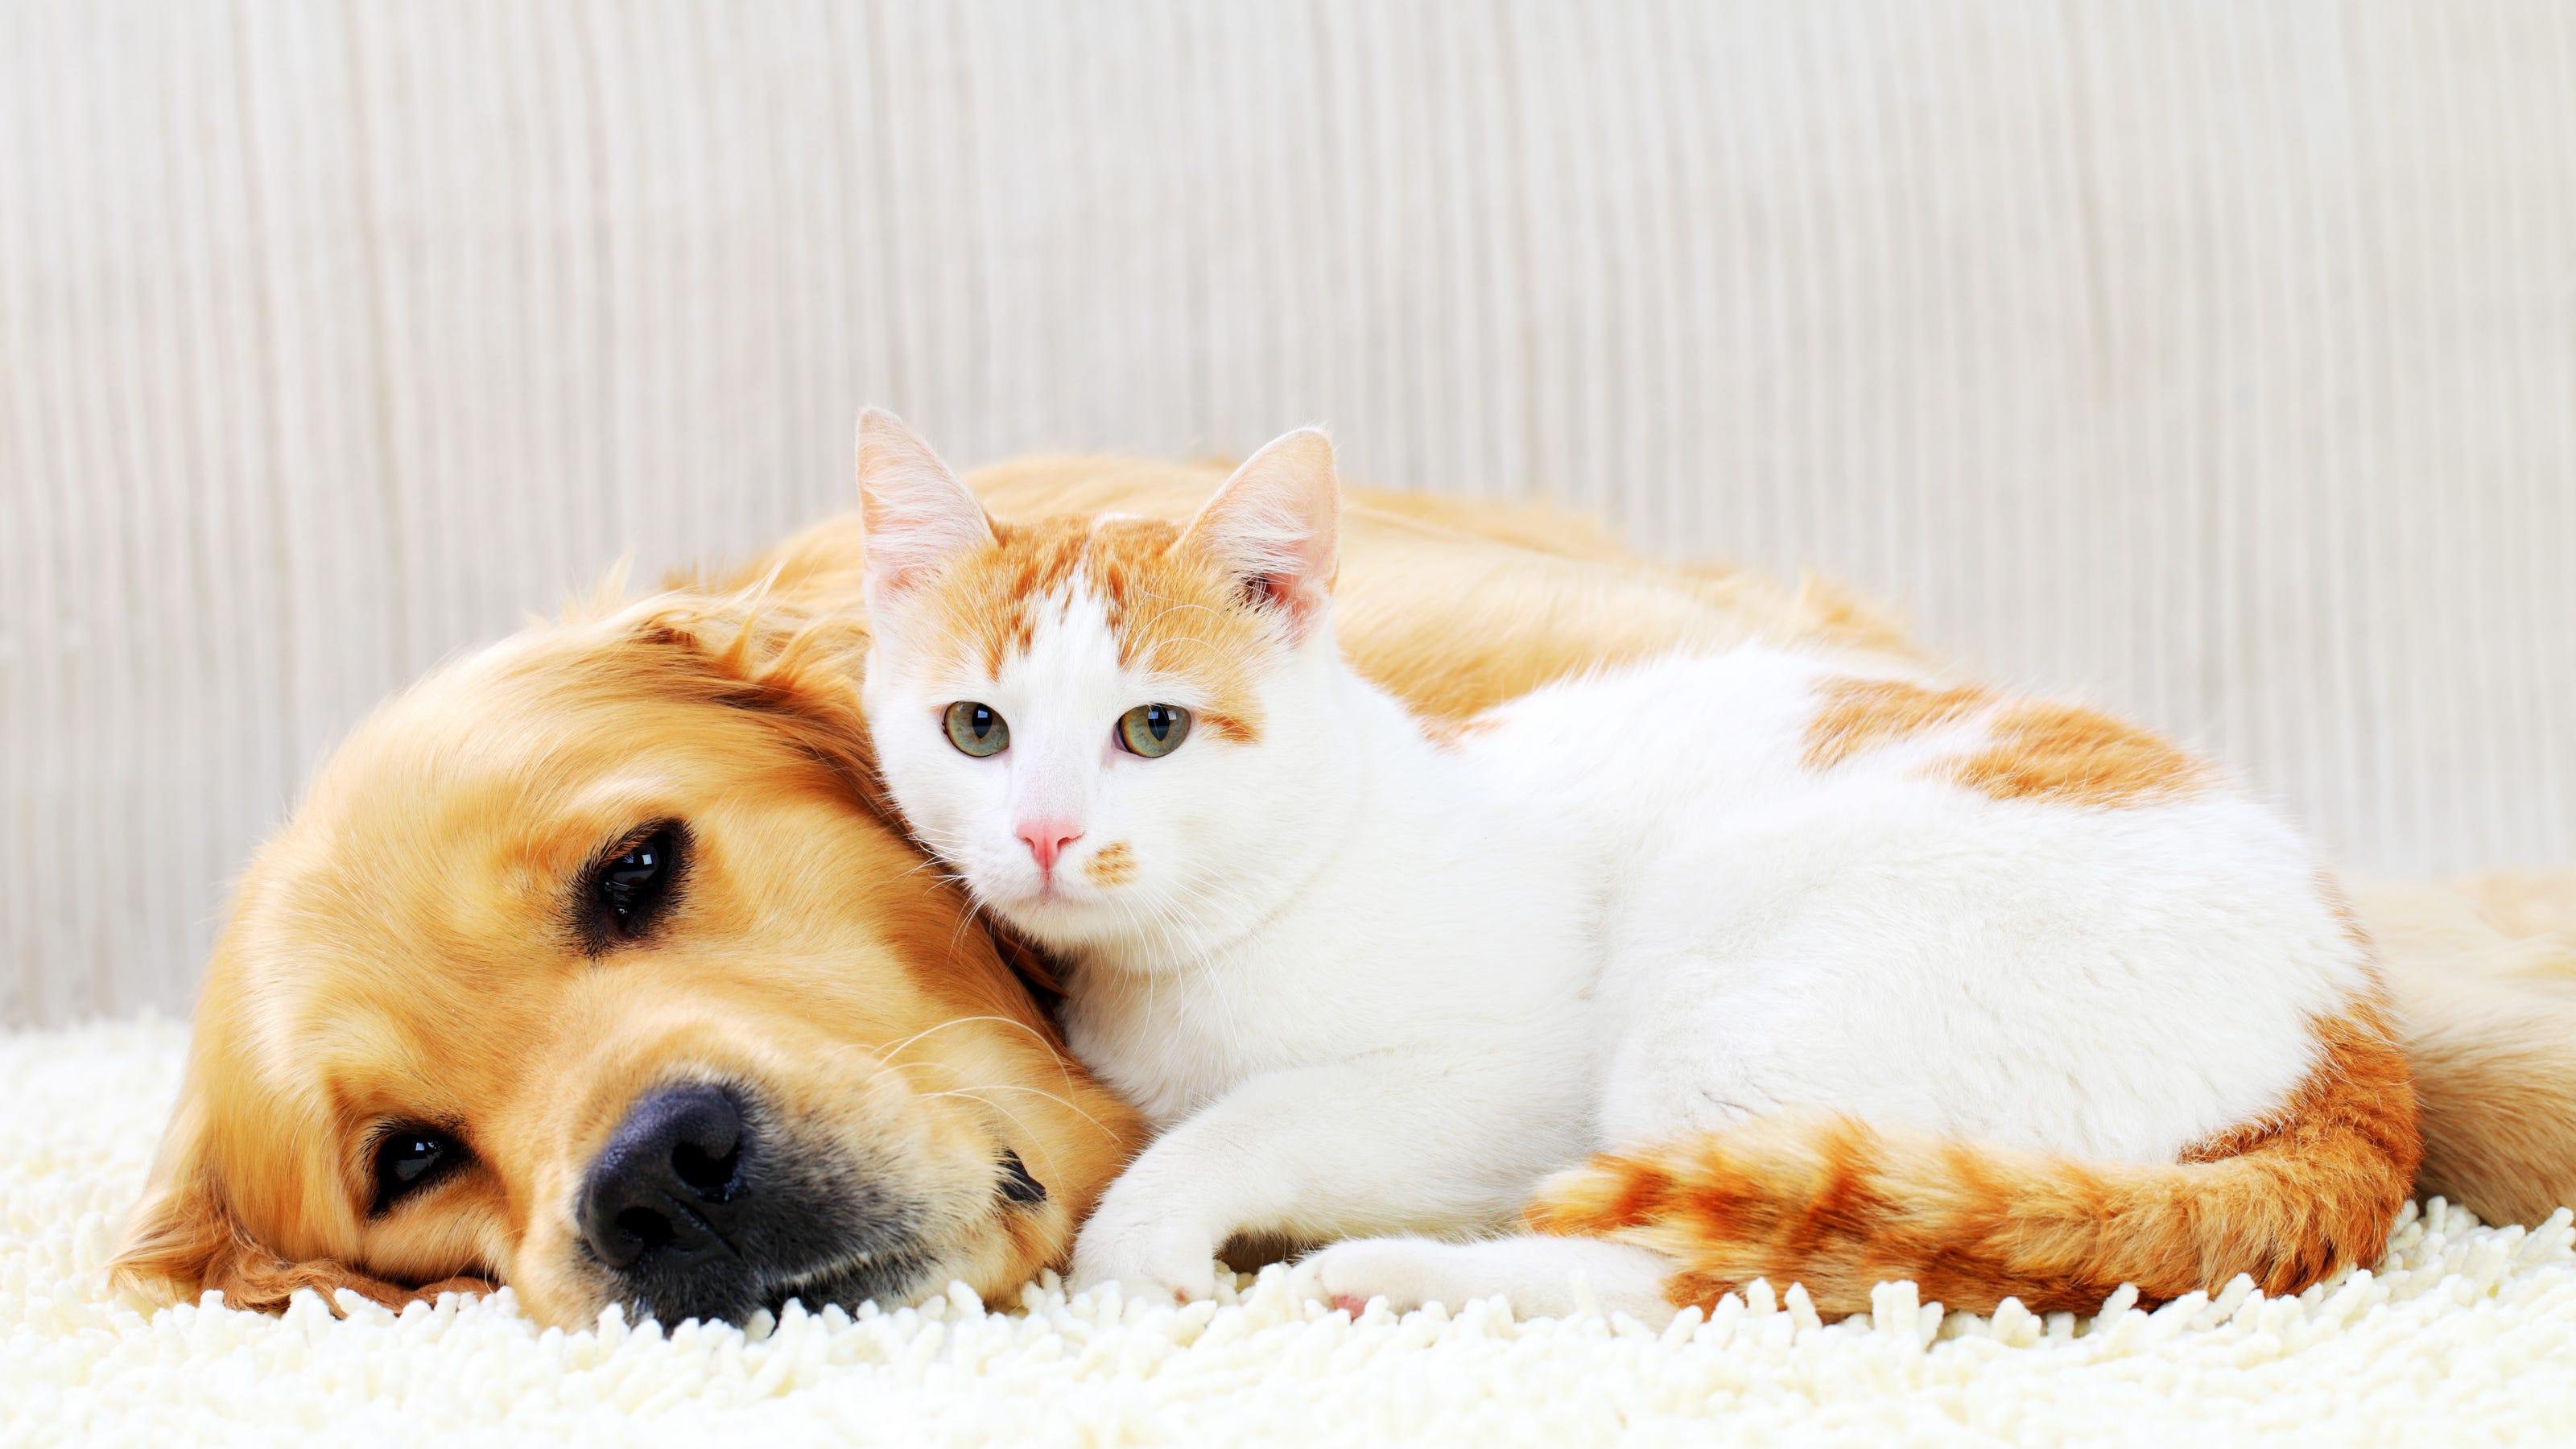 Together pet. Кошки и собаки. Картинки кошек и собак. Взаимоотношения собак и кошек. Собака и кошка вместе.